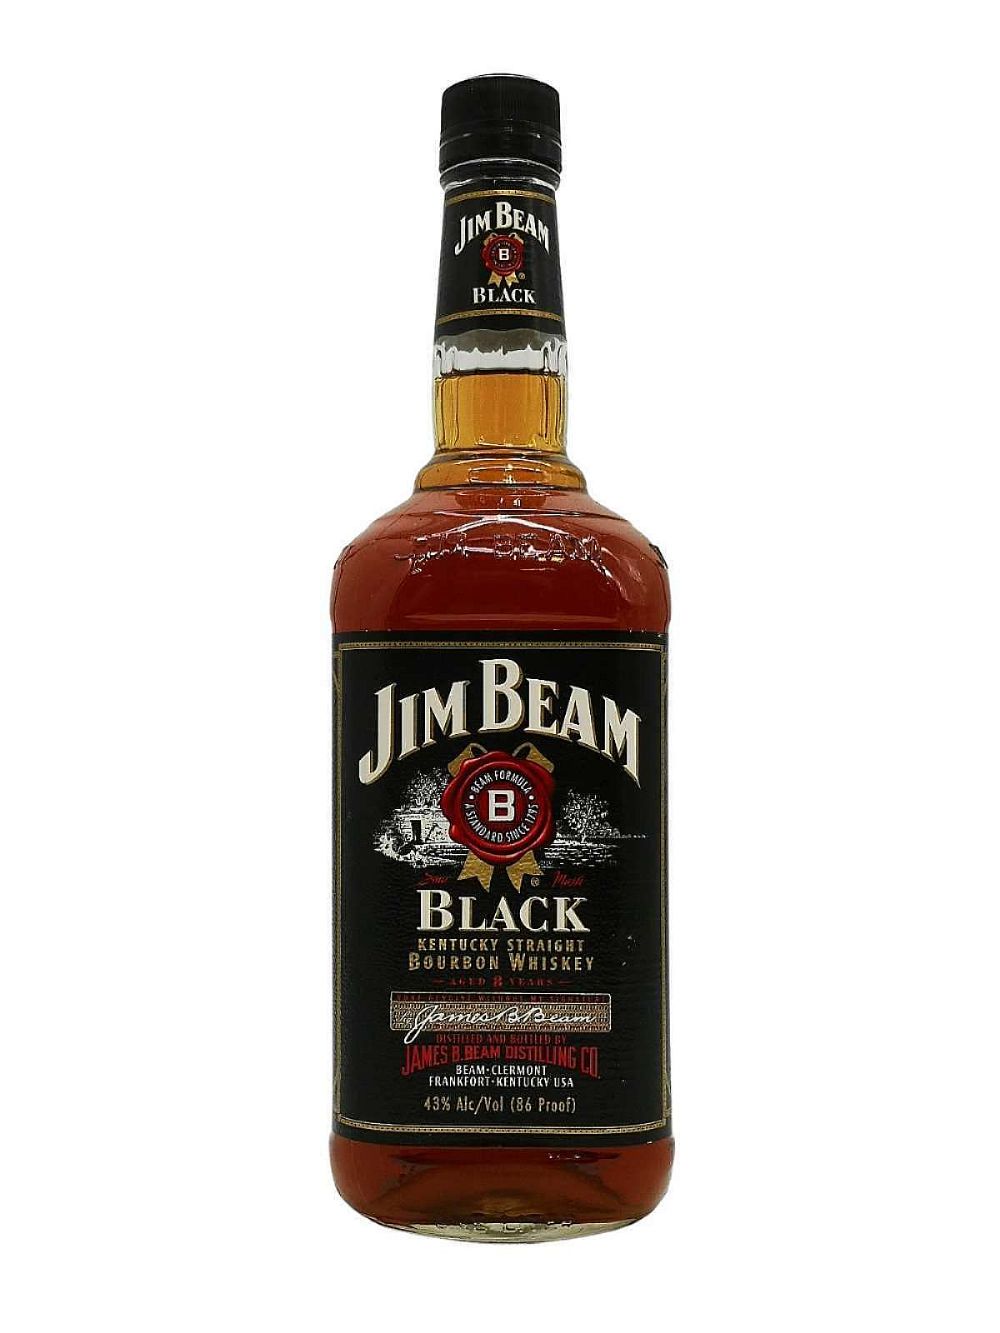 Irish Whiskey Whiskey Extra-aged Platform Black, Online Bidders | Auction | Beam Straight Bourbon Kentucky Jim